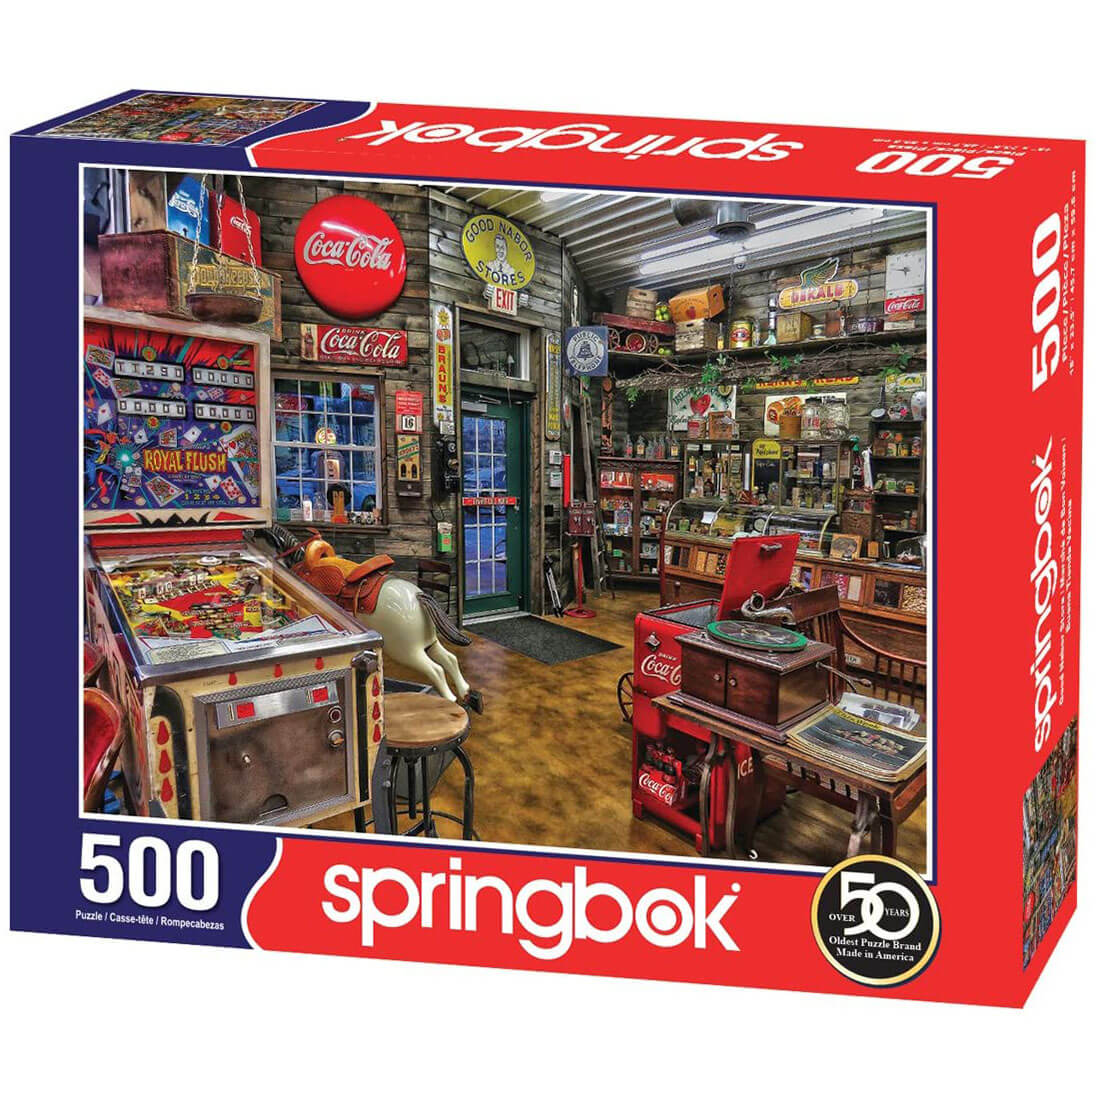 Springbok Good Nabor Store 500 Piece Jigsaw Puzzle